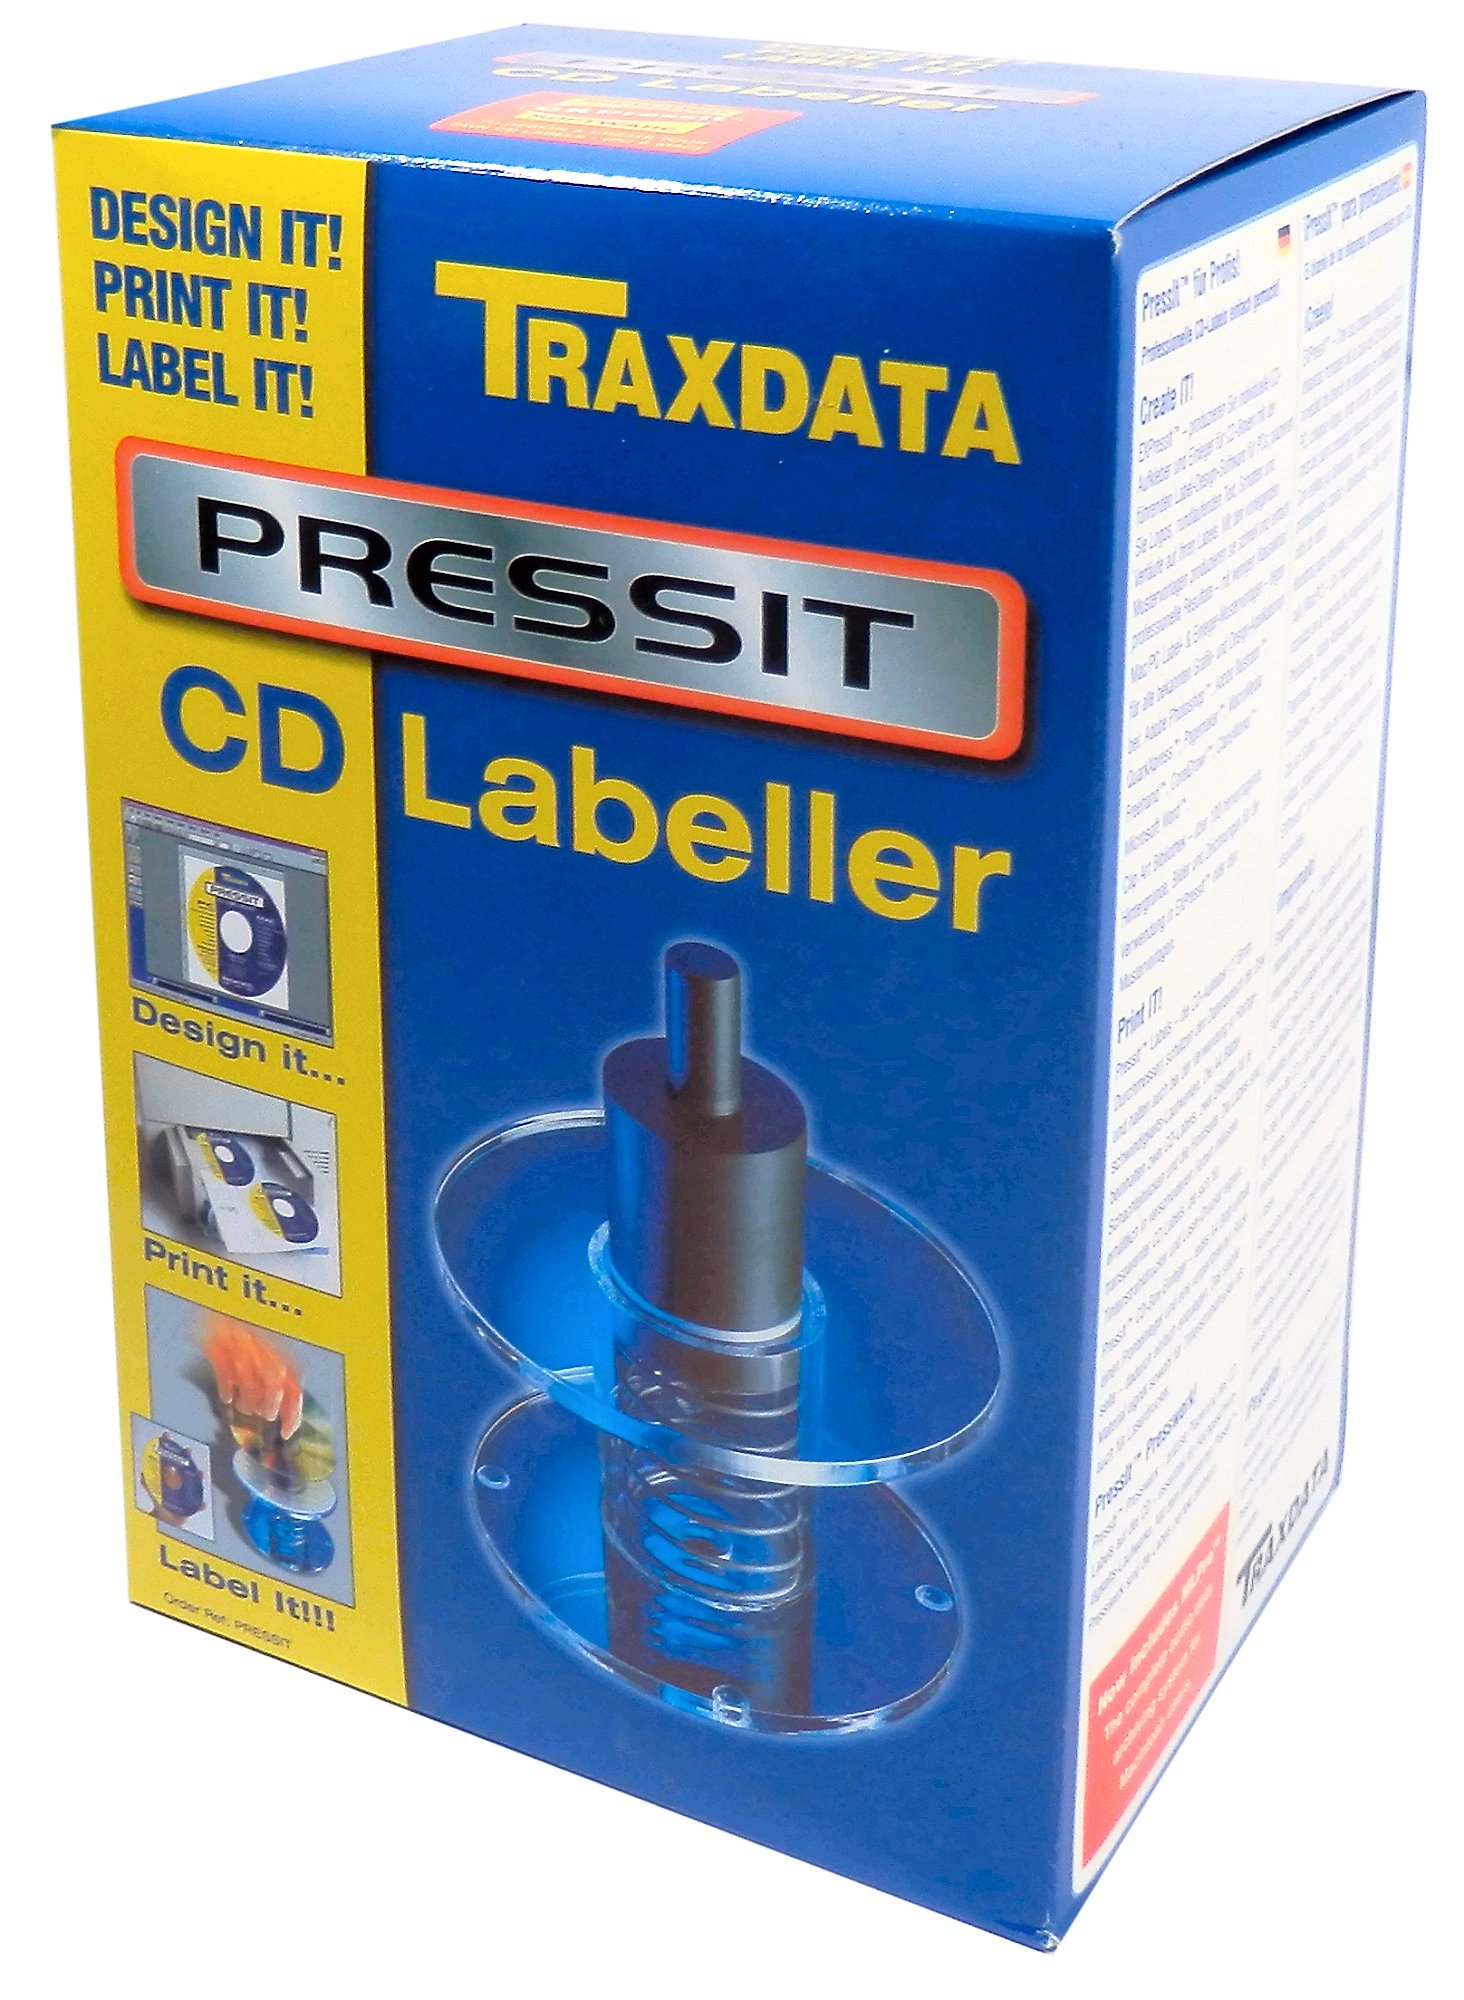 Technical Data - Traxdata PressIT CD Label Applicator With Pressit Label Template